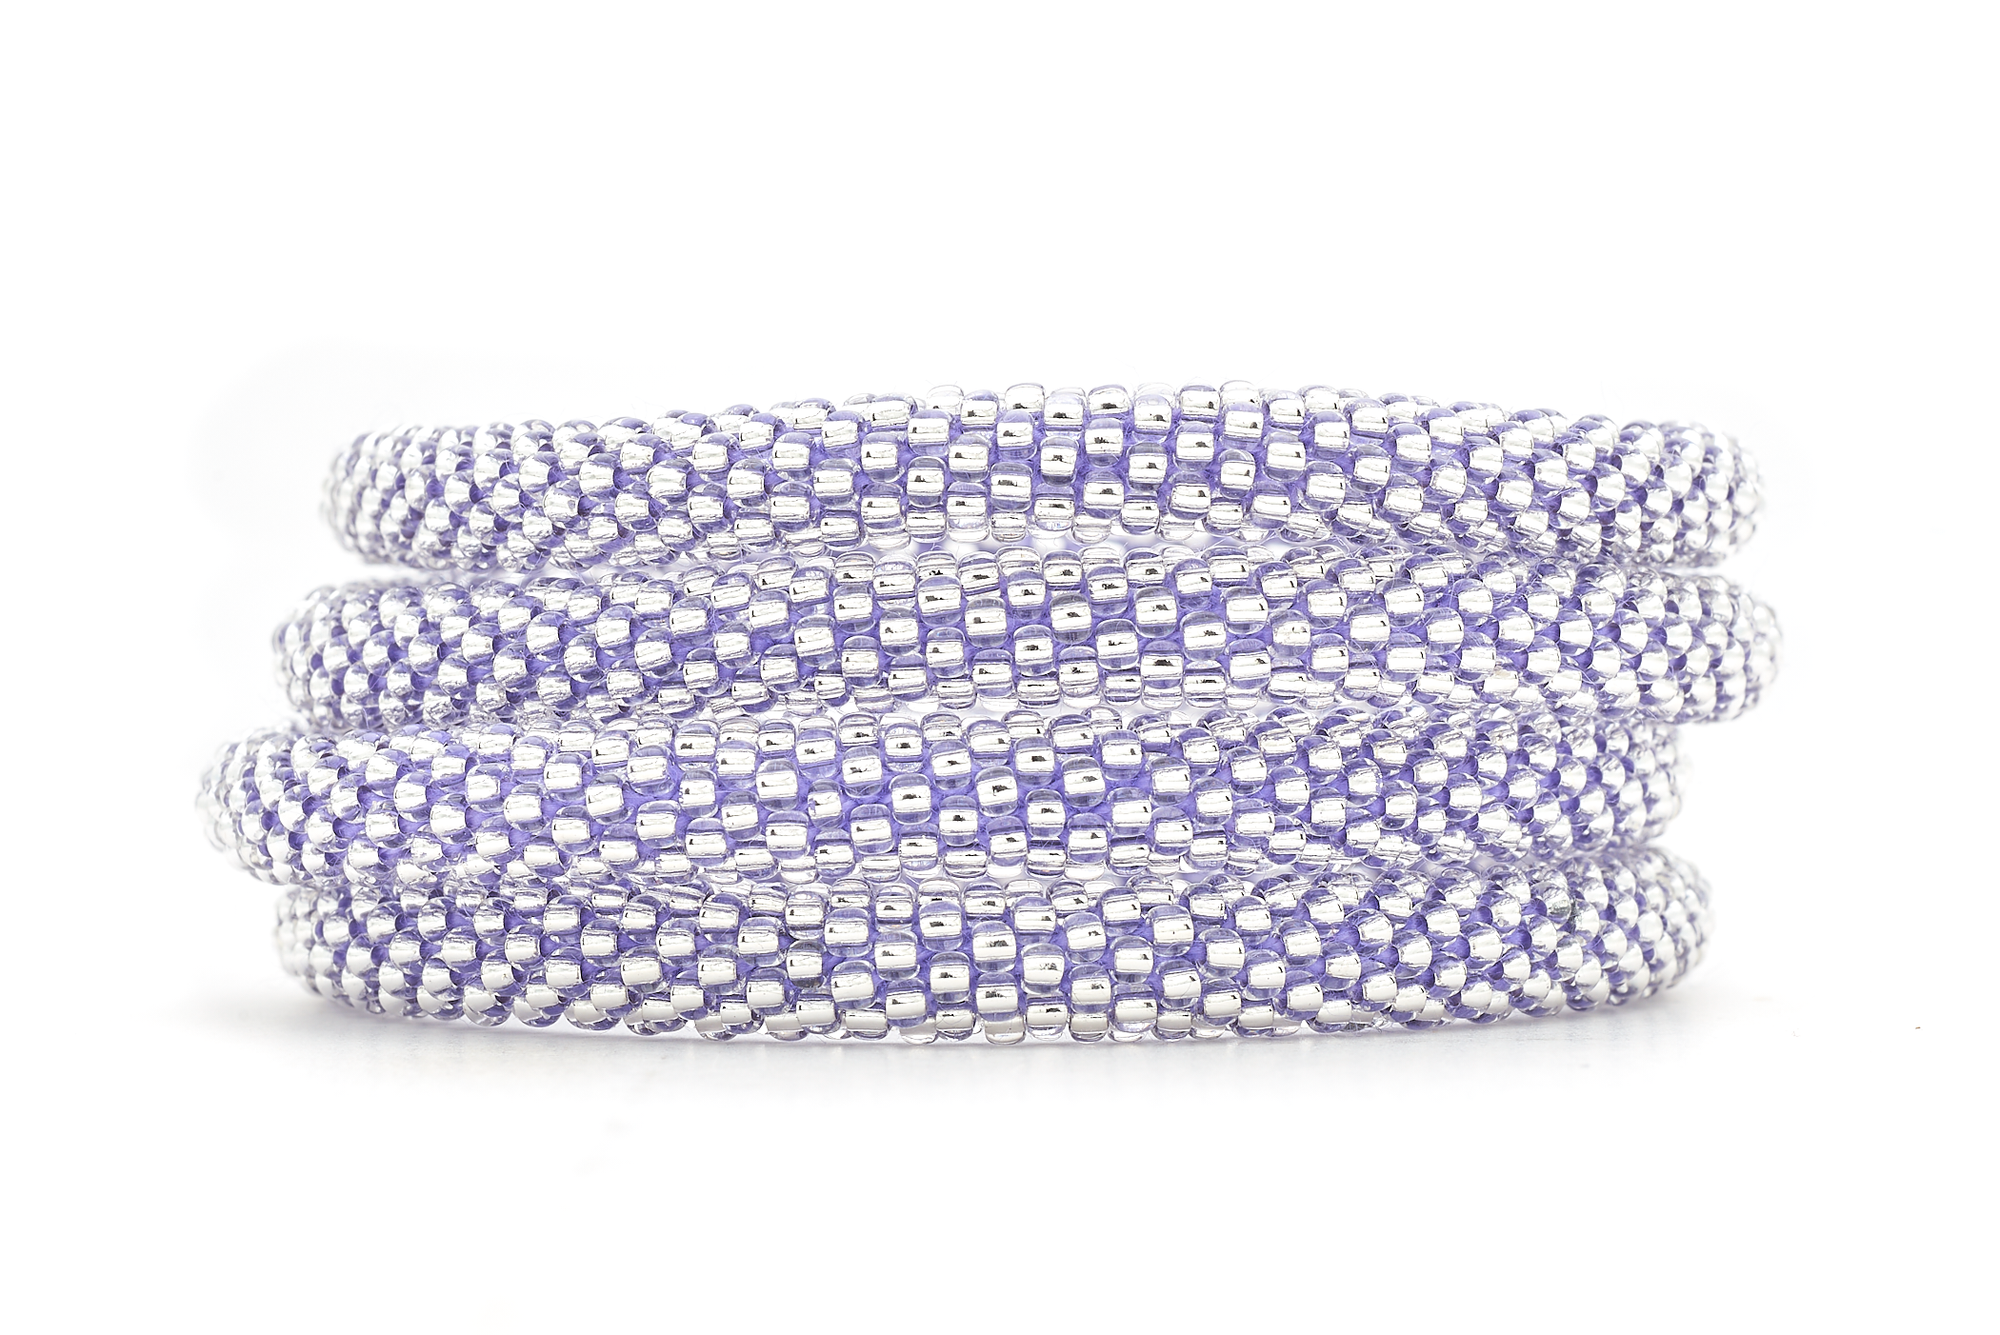 Sashka Co. Extended 8" Bracelet Clear Bead with Purple Thread Purple Diamond Sparkle Bracelet - Extended 8"